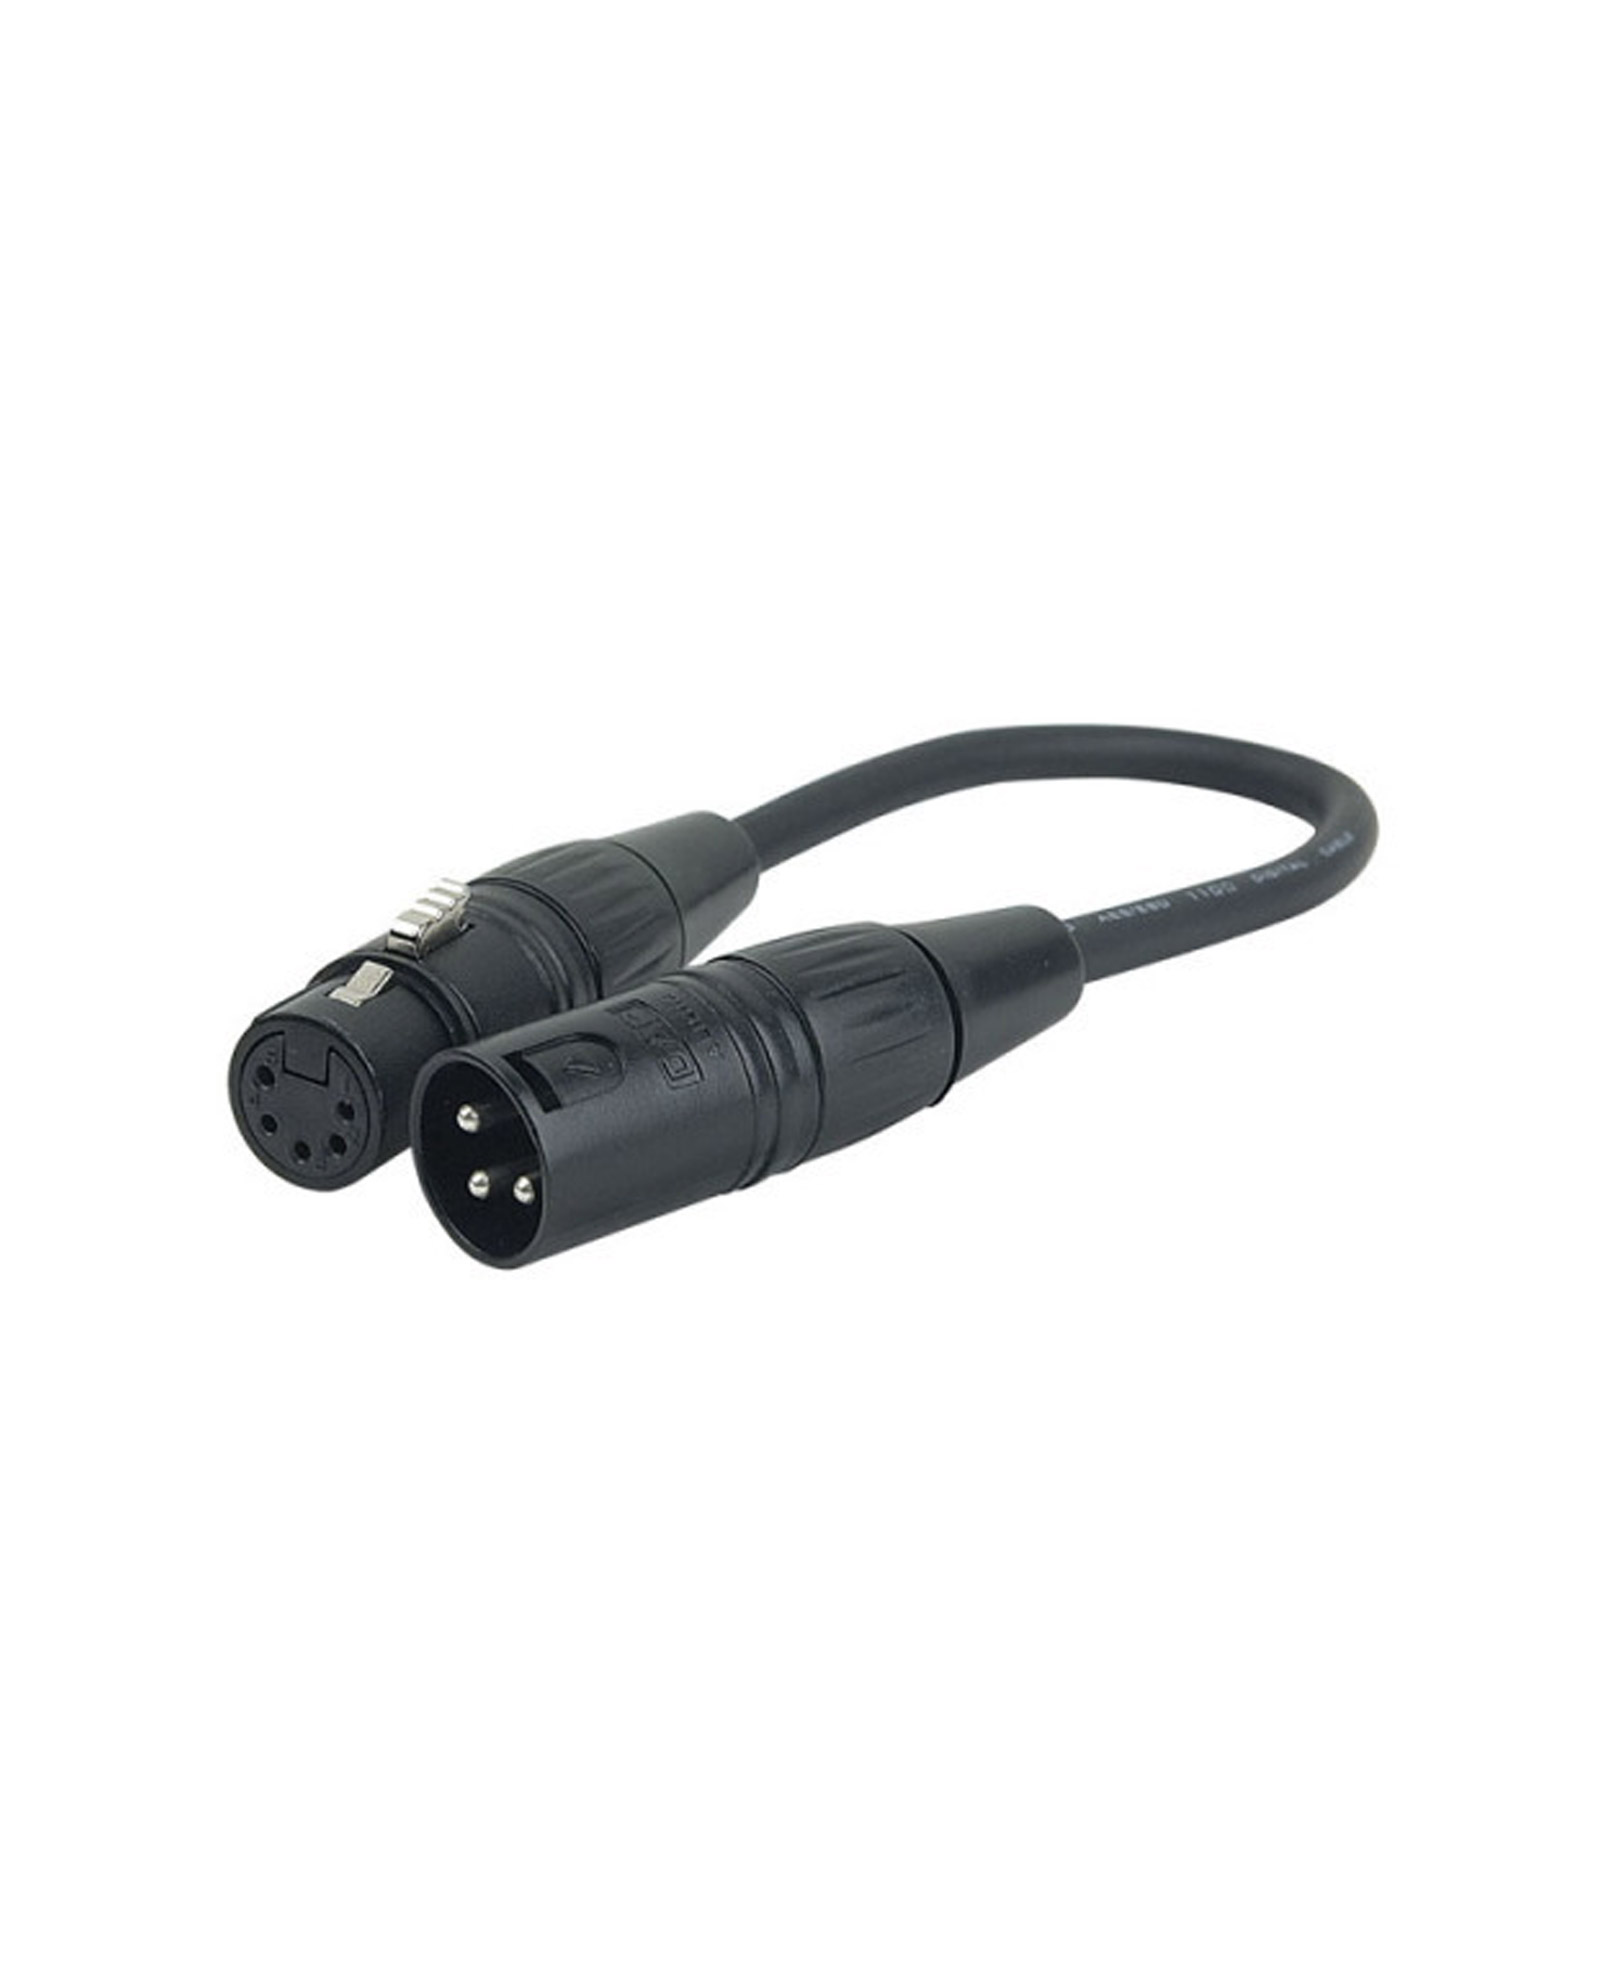 3 Pin Xlr Male To 5 Pin Xlr Female Dmx Cable Adaptor